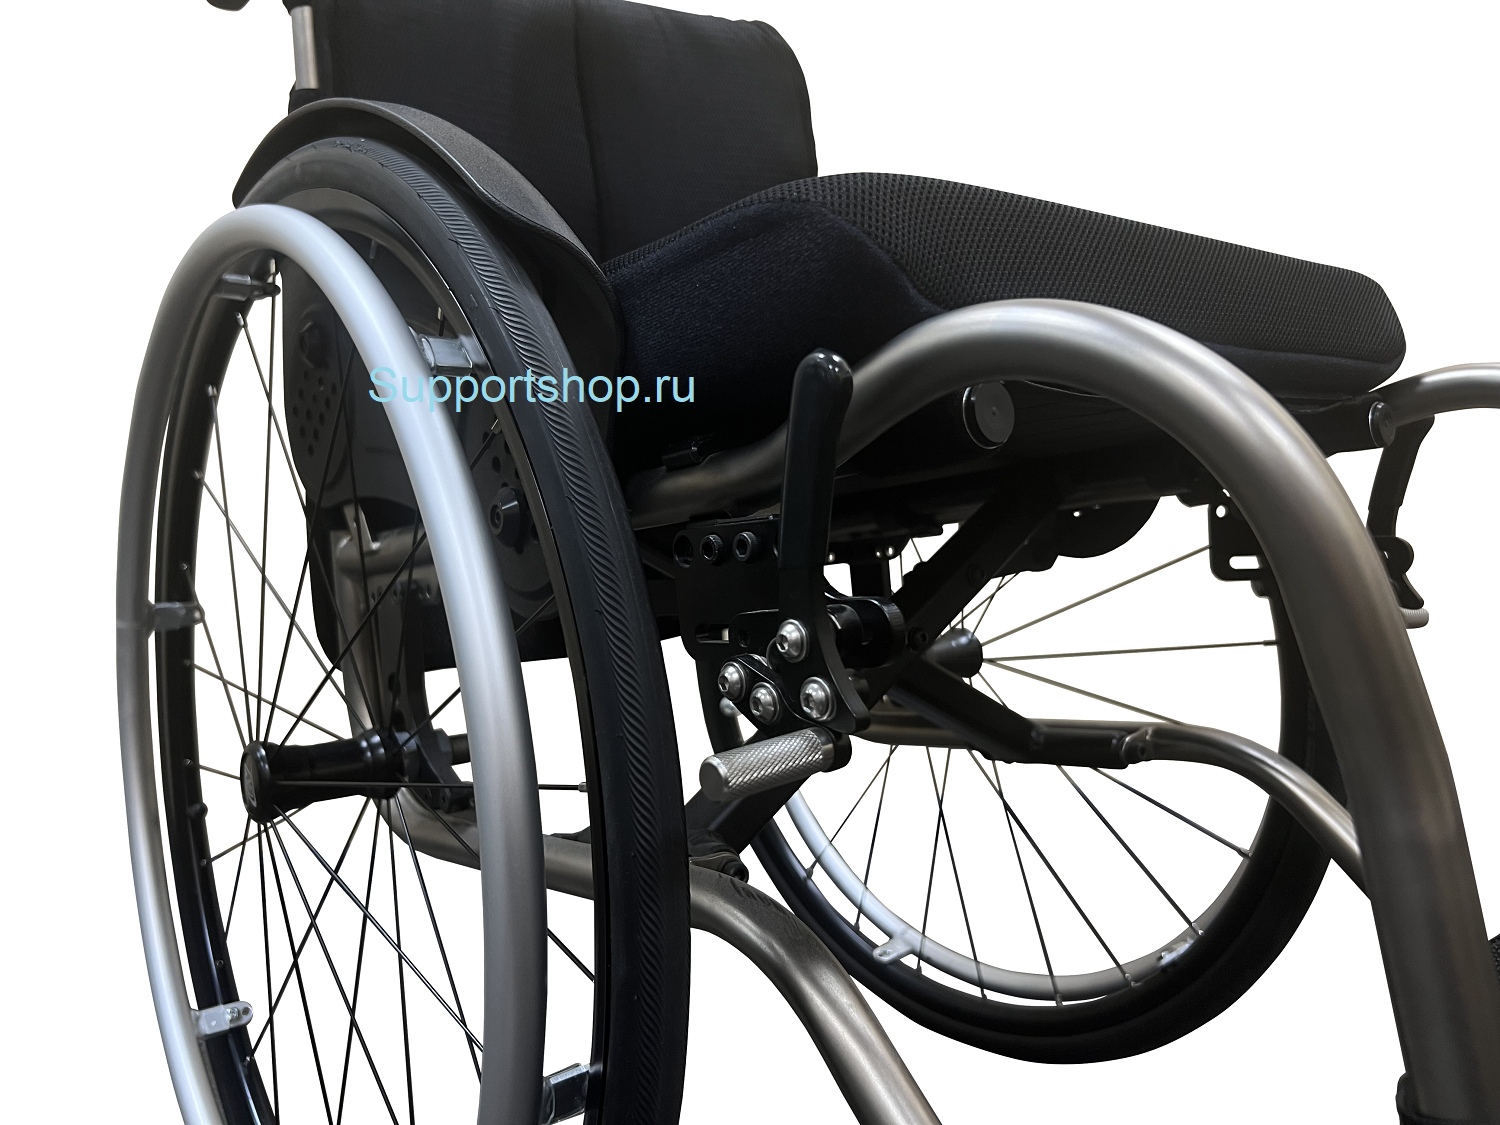 Инвалидная кресло-коляска активного типа Zenith XT